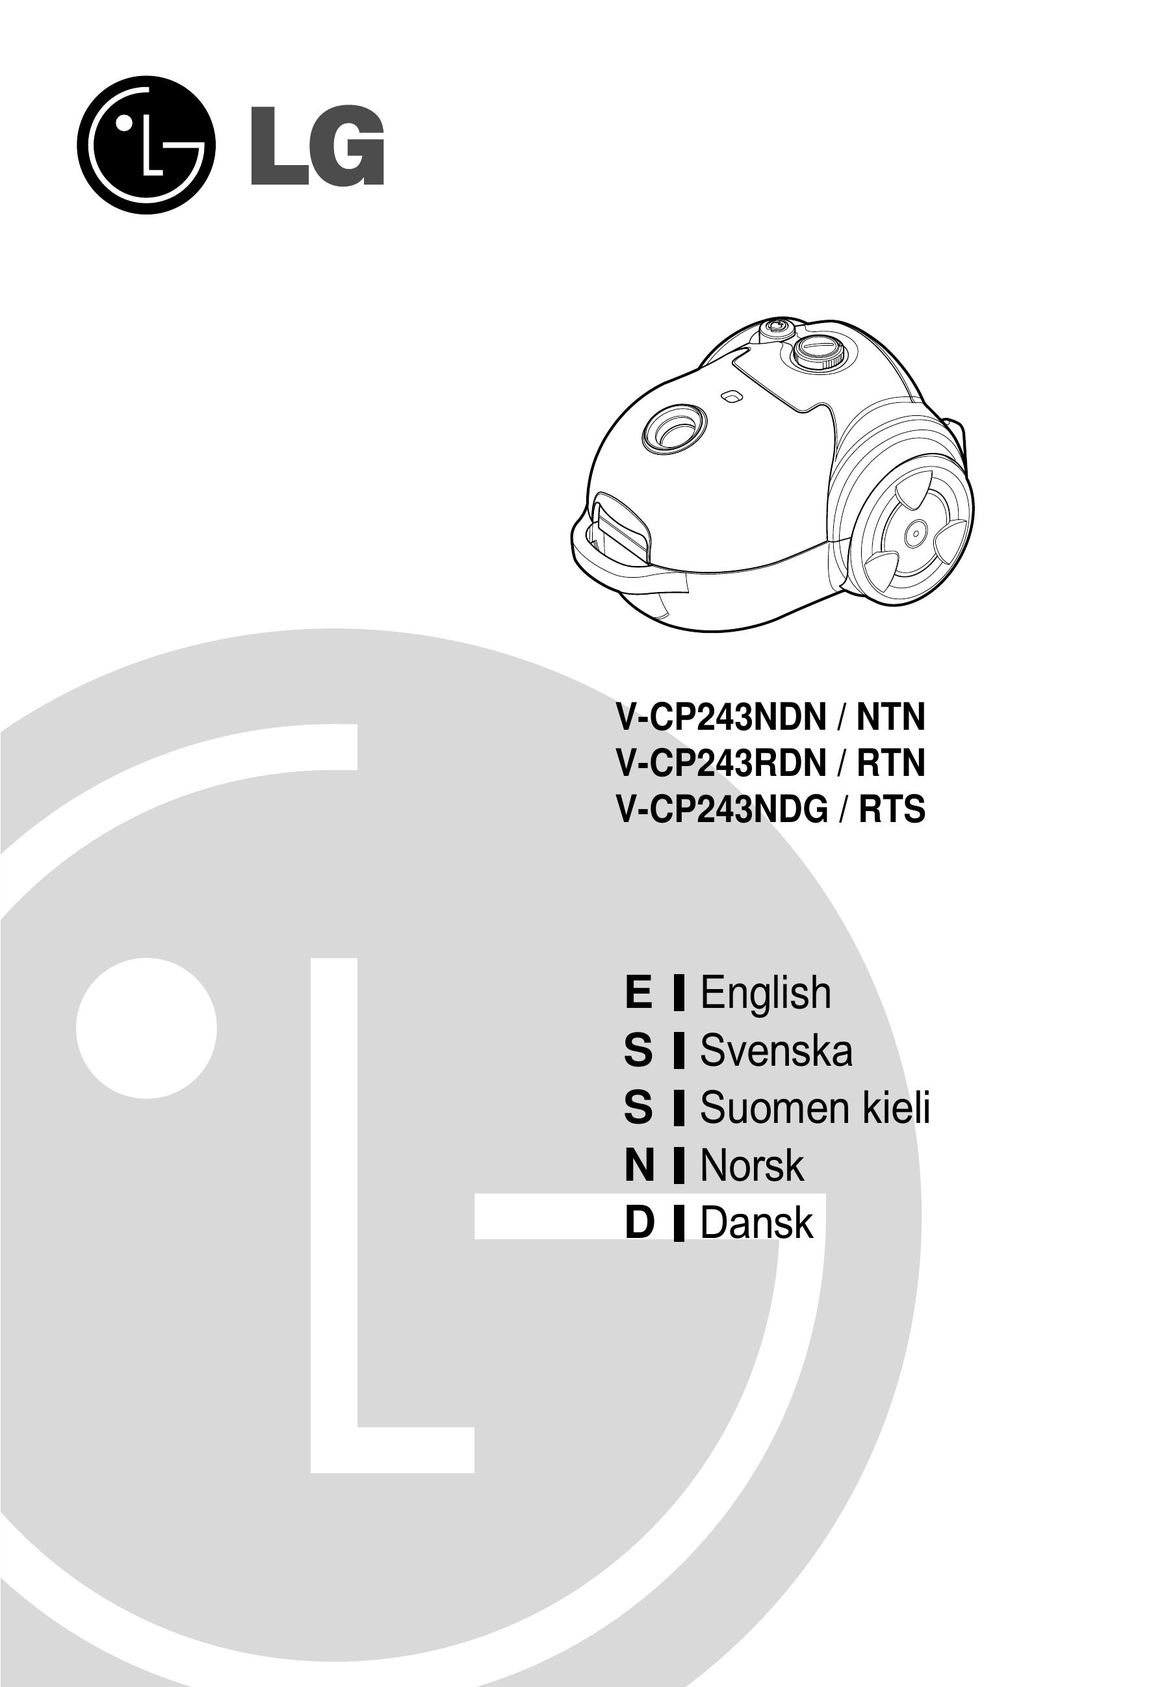 LG Electronics V-CP243NDN/NTN Vacuum Cleaner User Manual